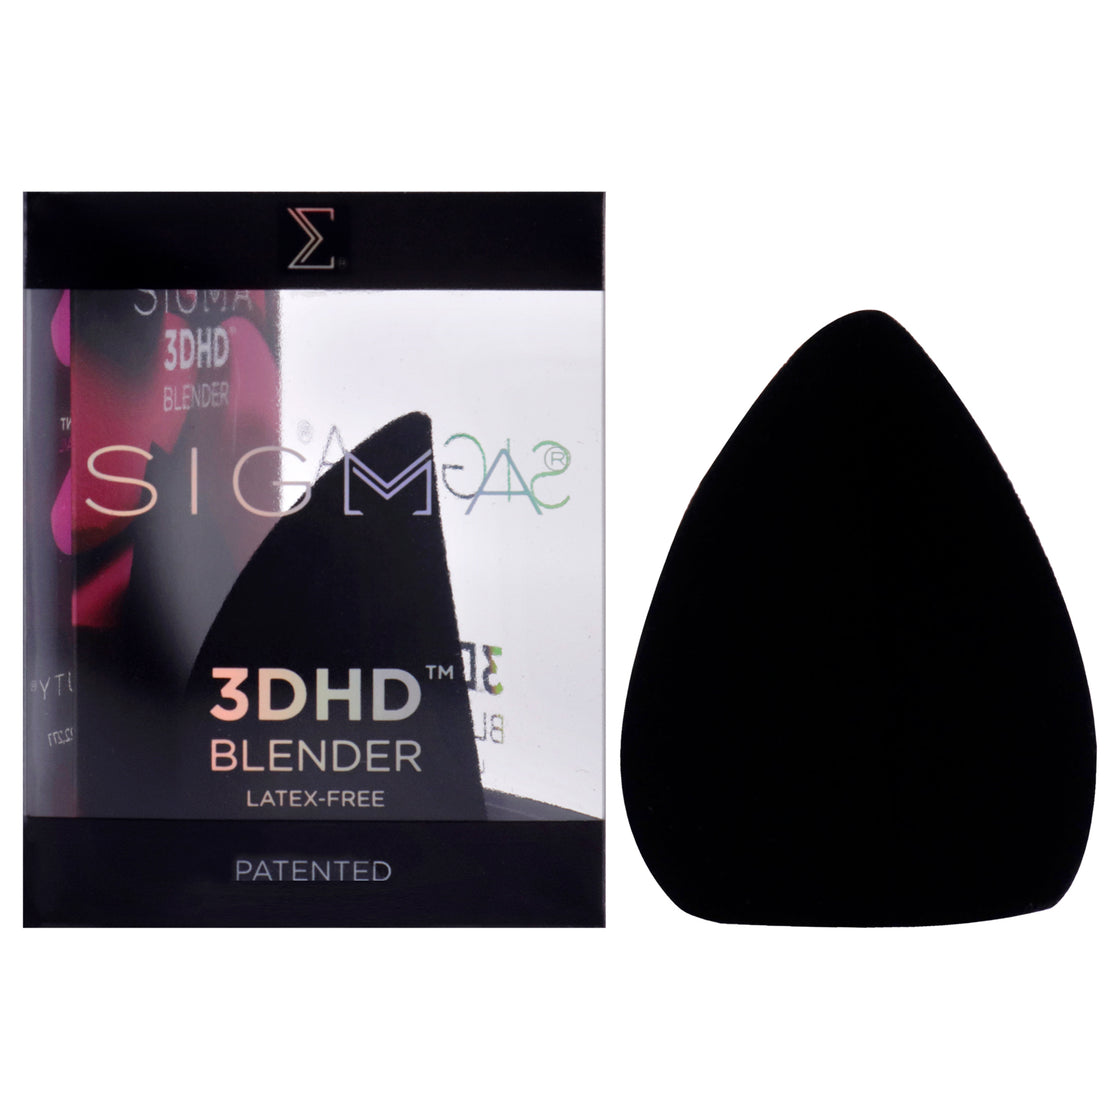 3DHD Blender - Black by SIGMA for Women - 1 Pc Sponge